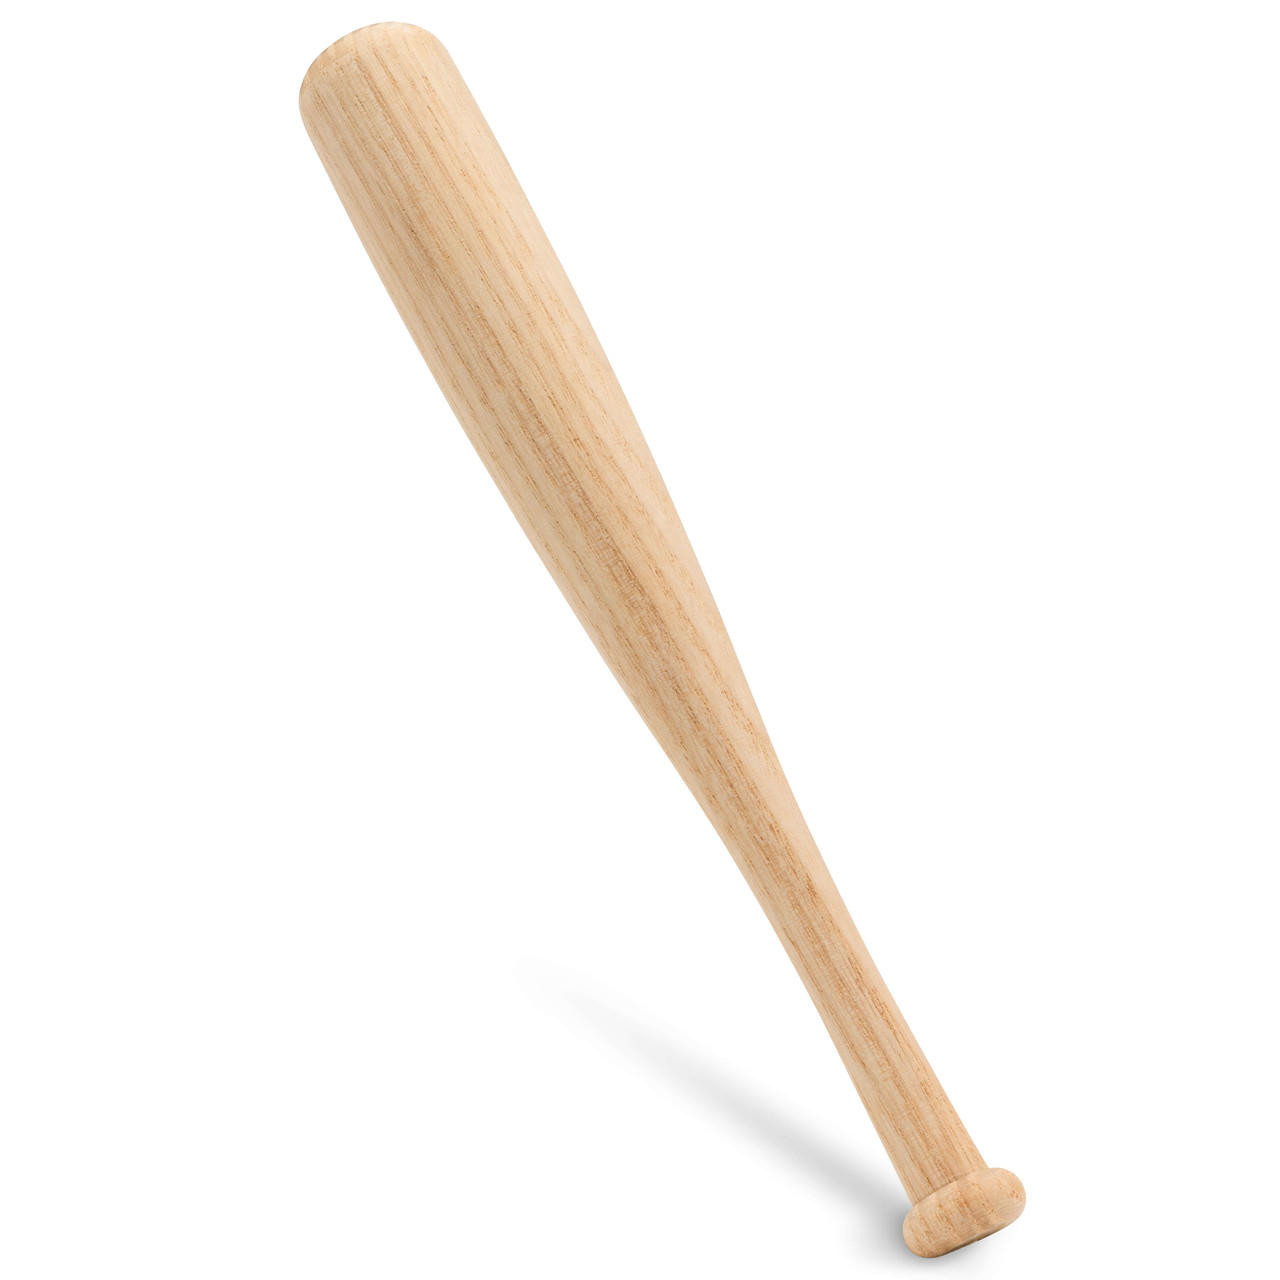 6 miniature wood baseball bats